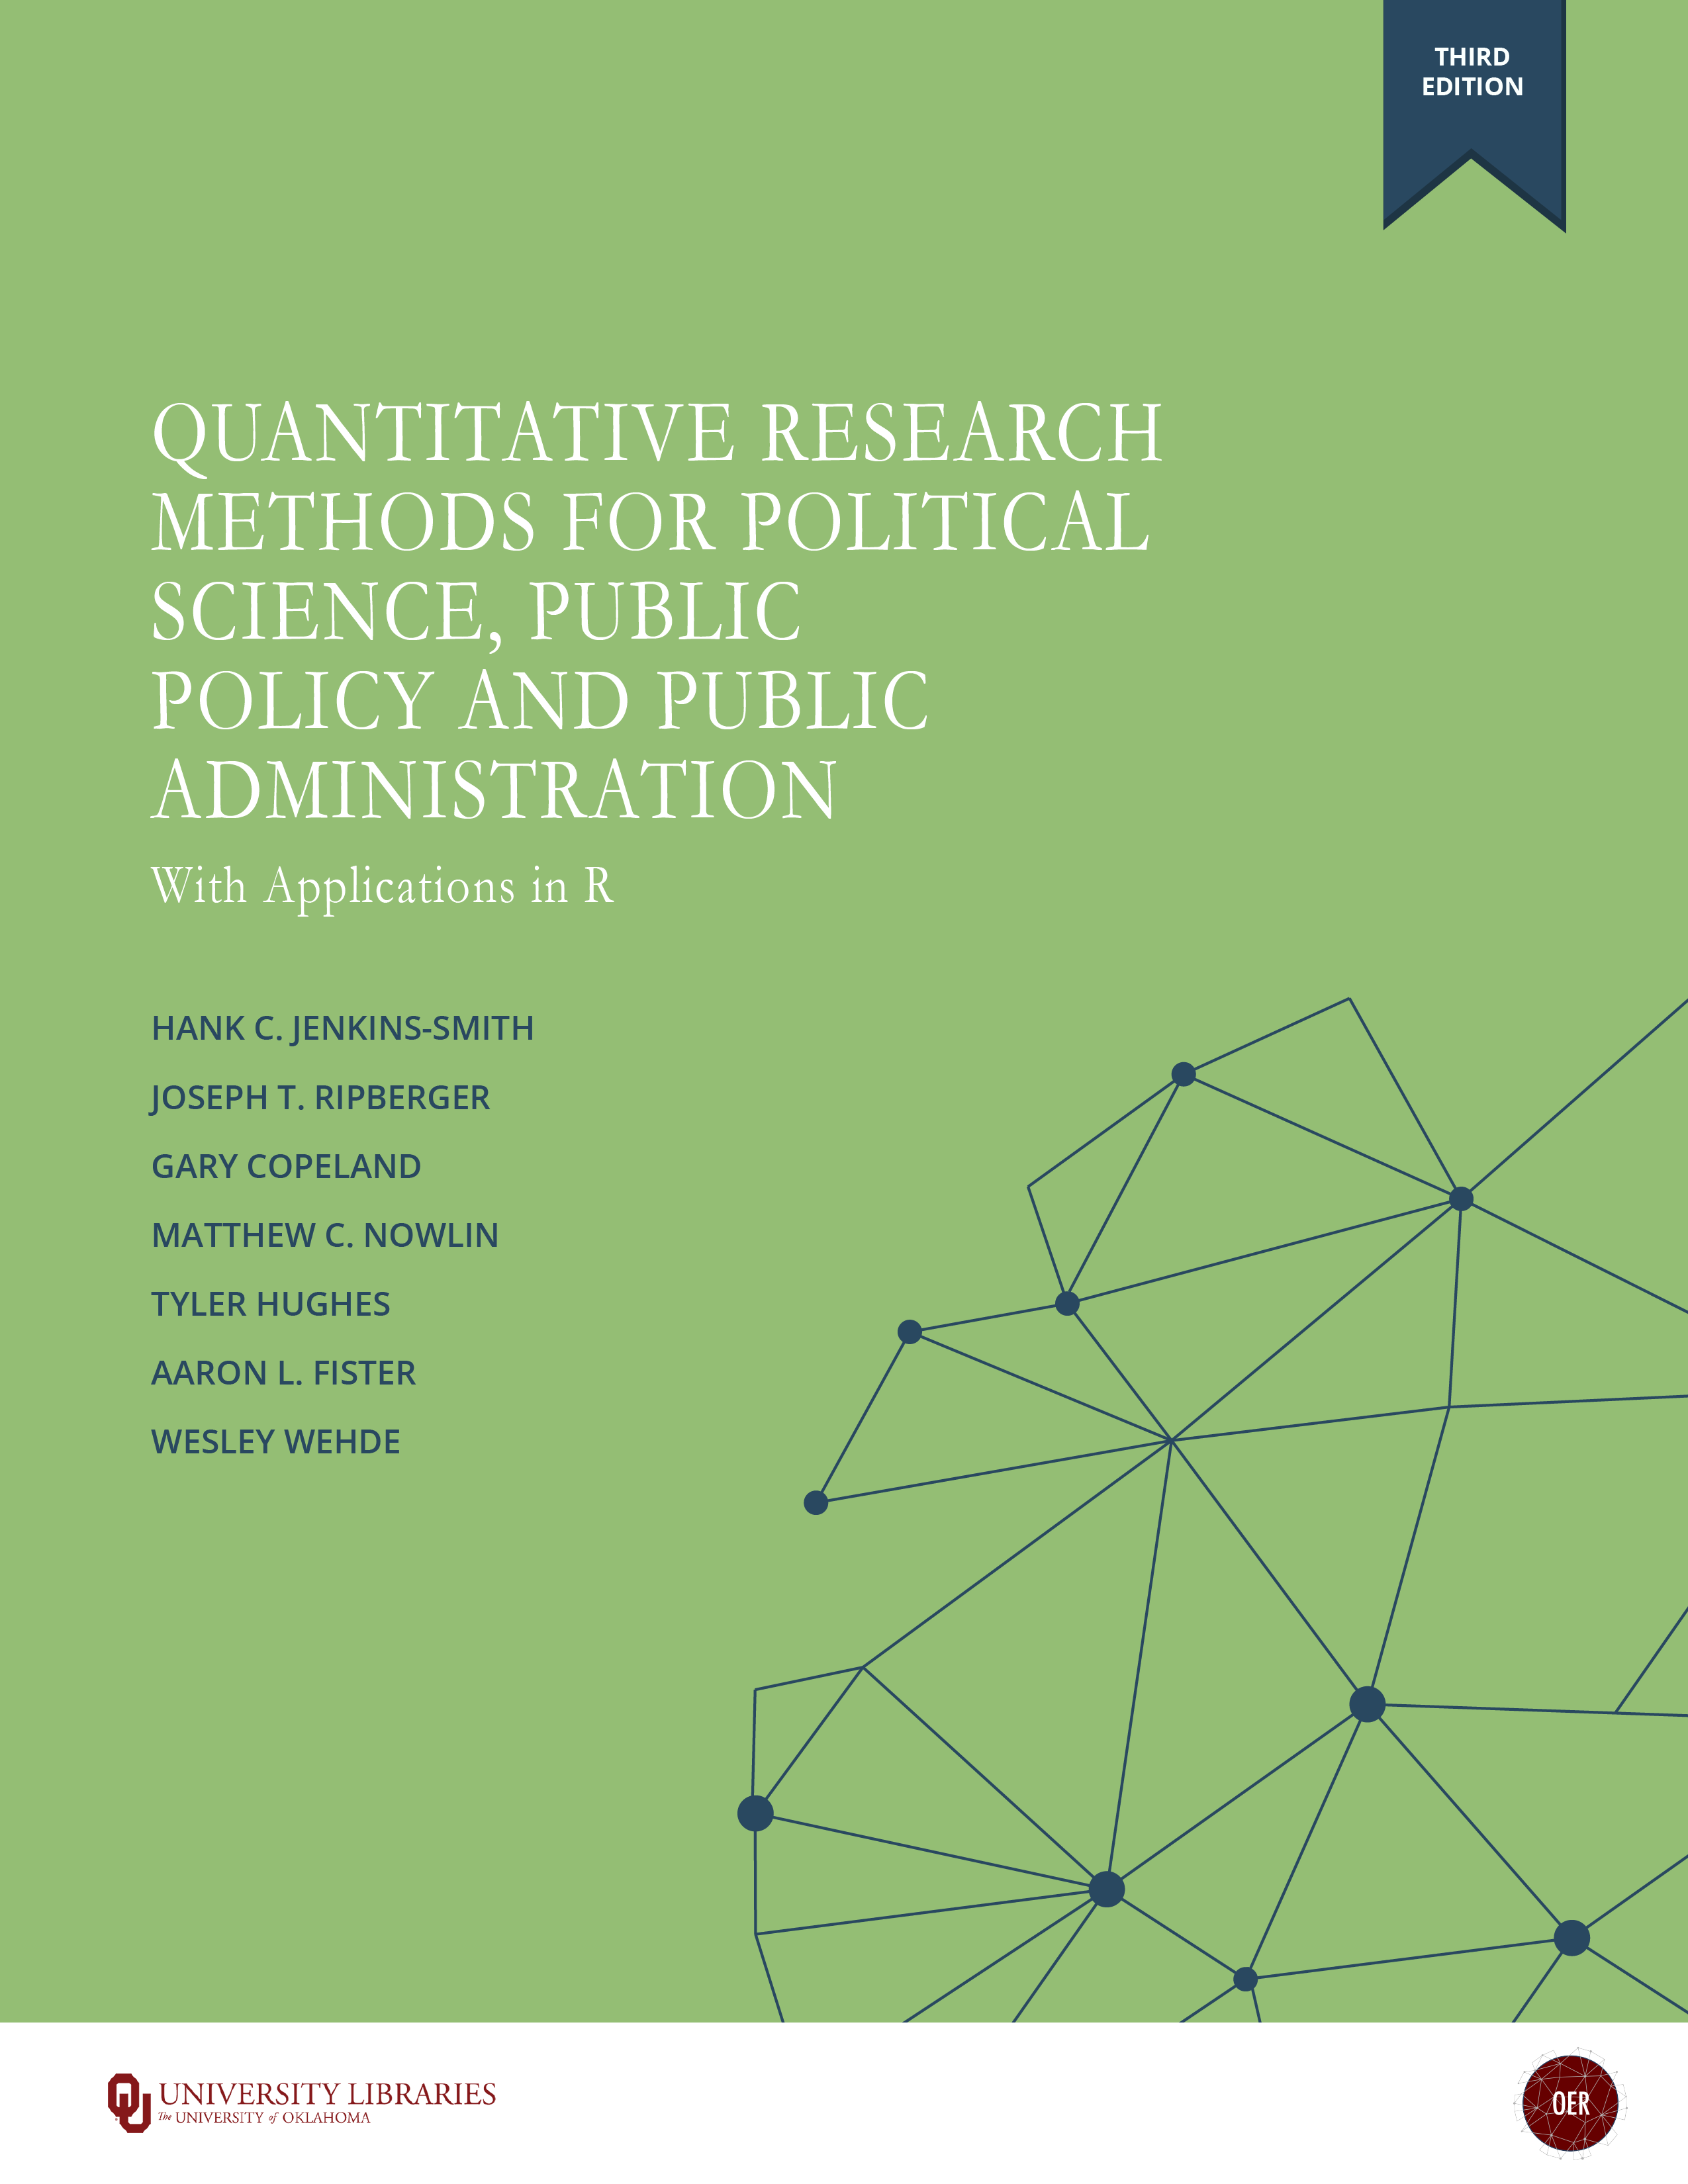 quantitative research methods in political science